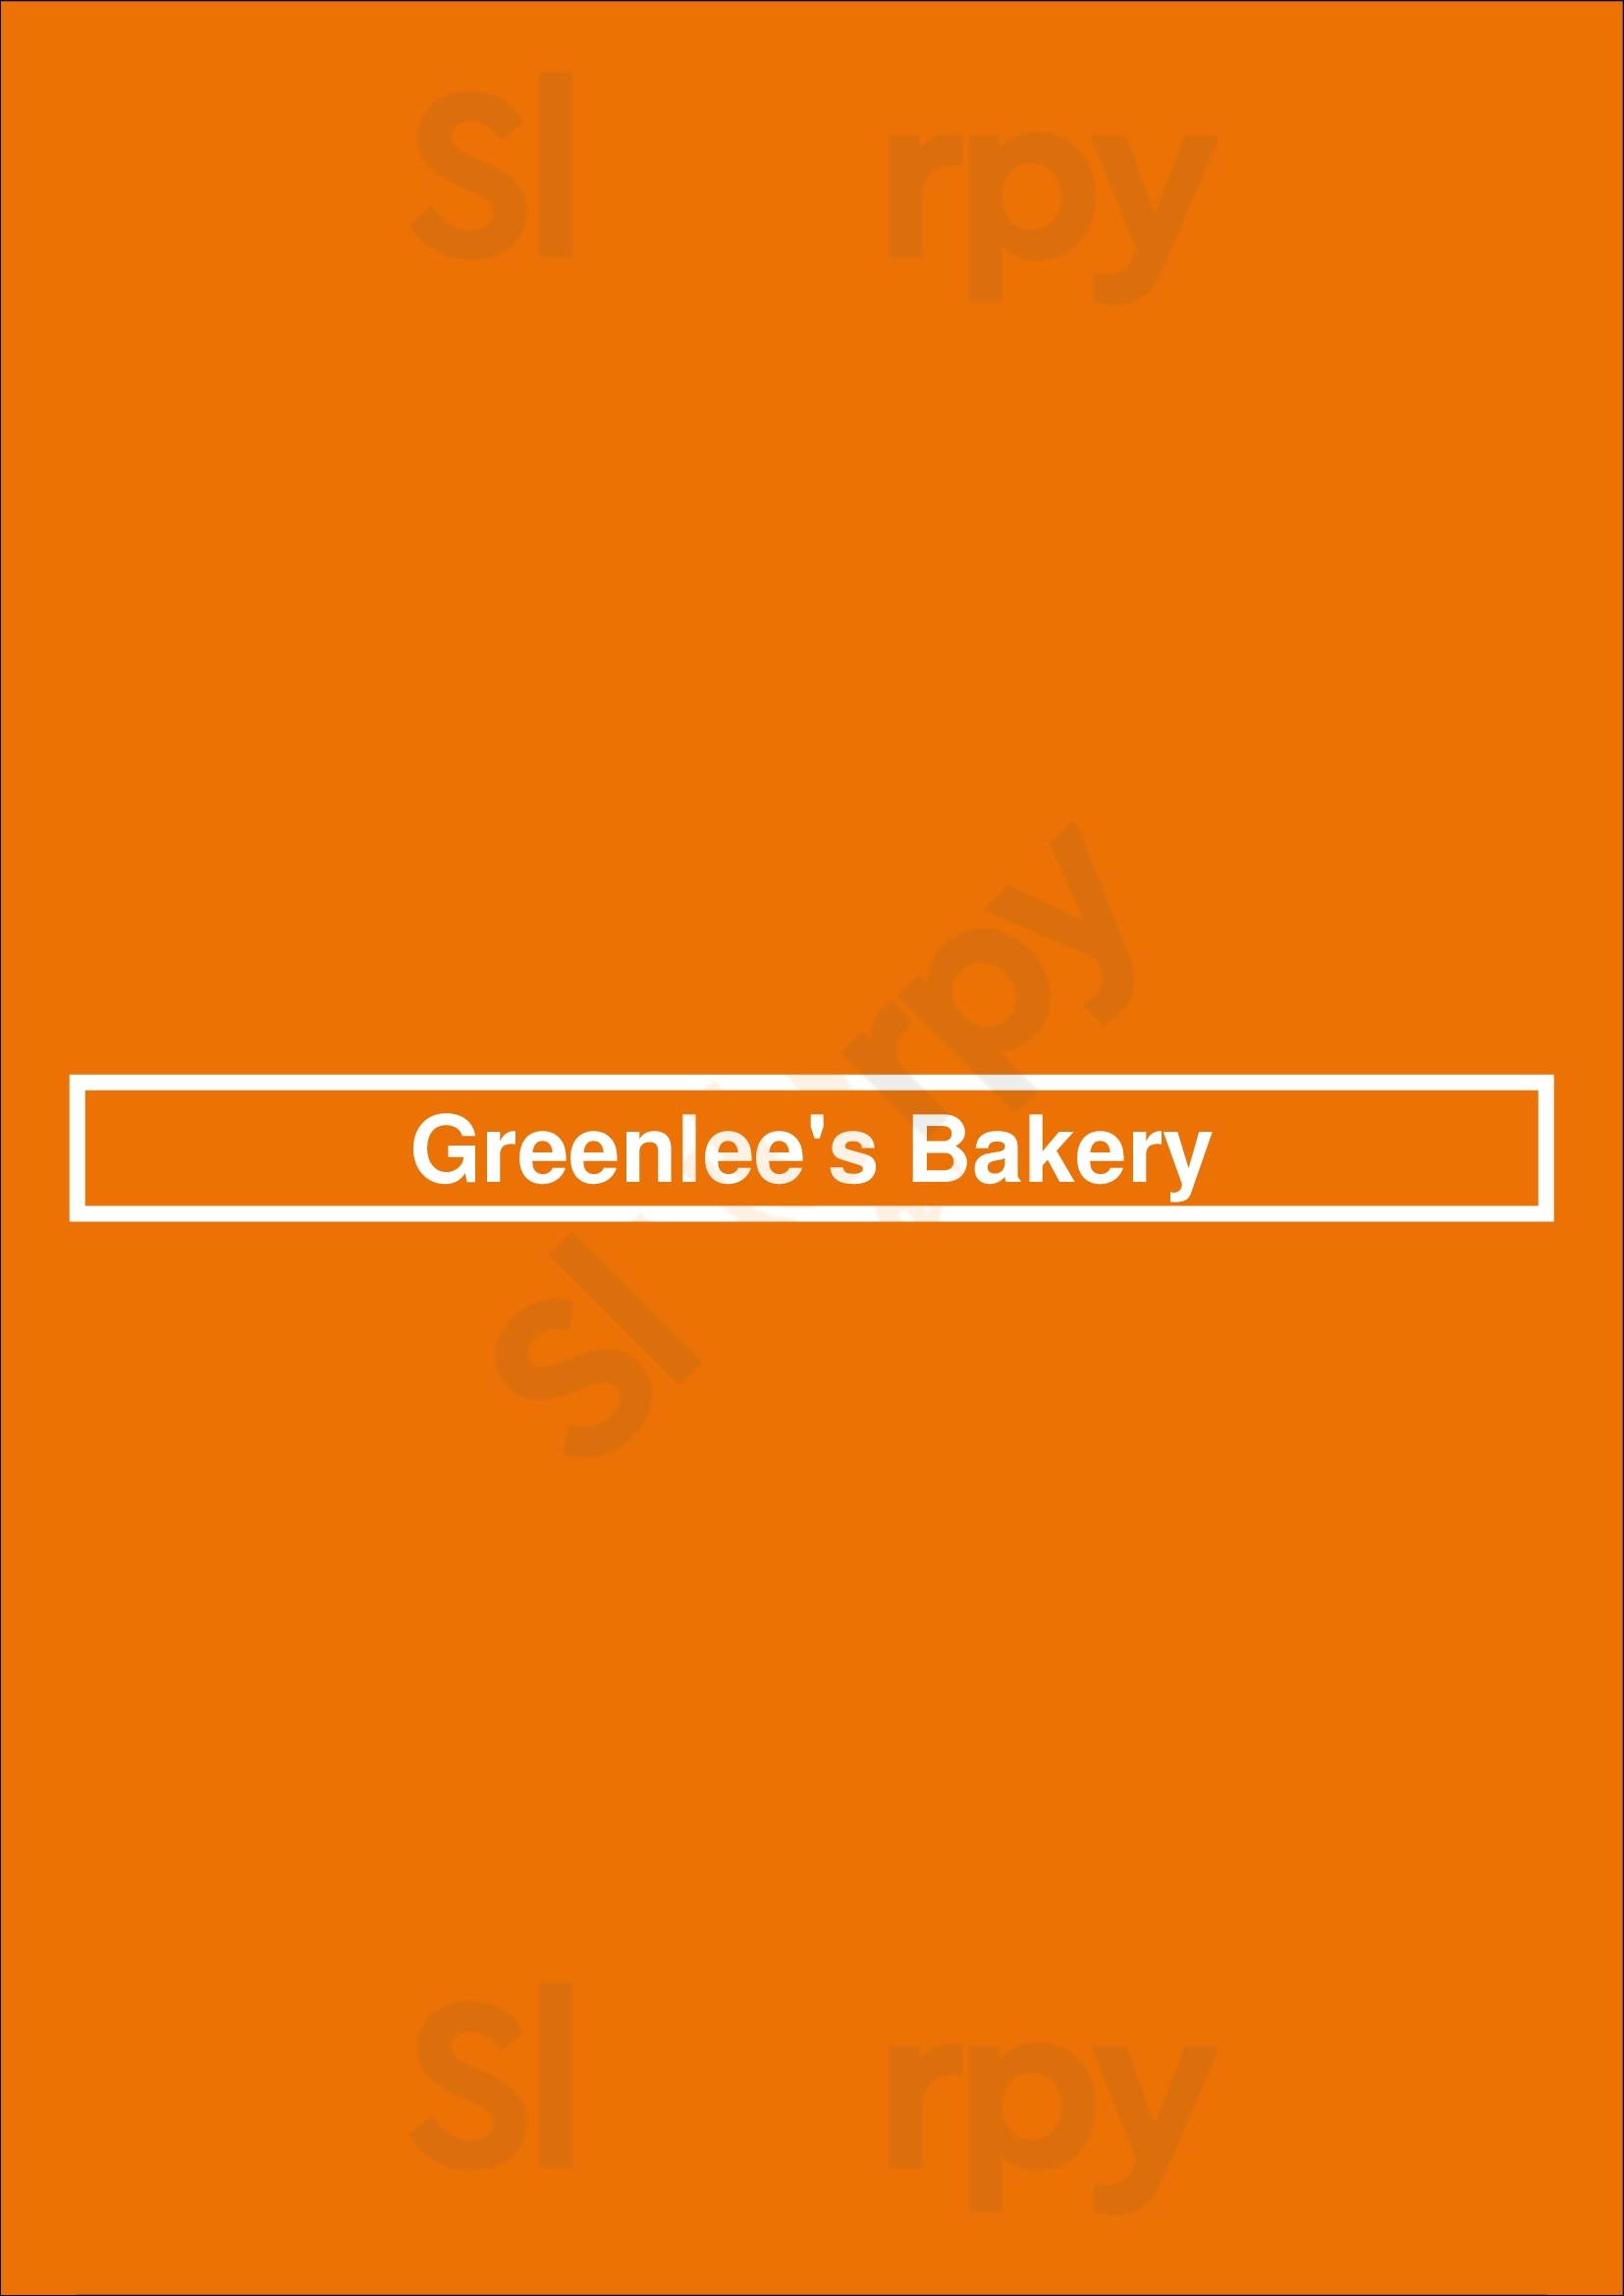 Greenlee's Bakery San Jose Menu - 1